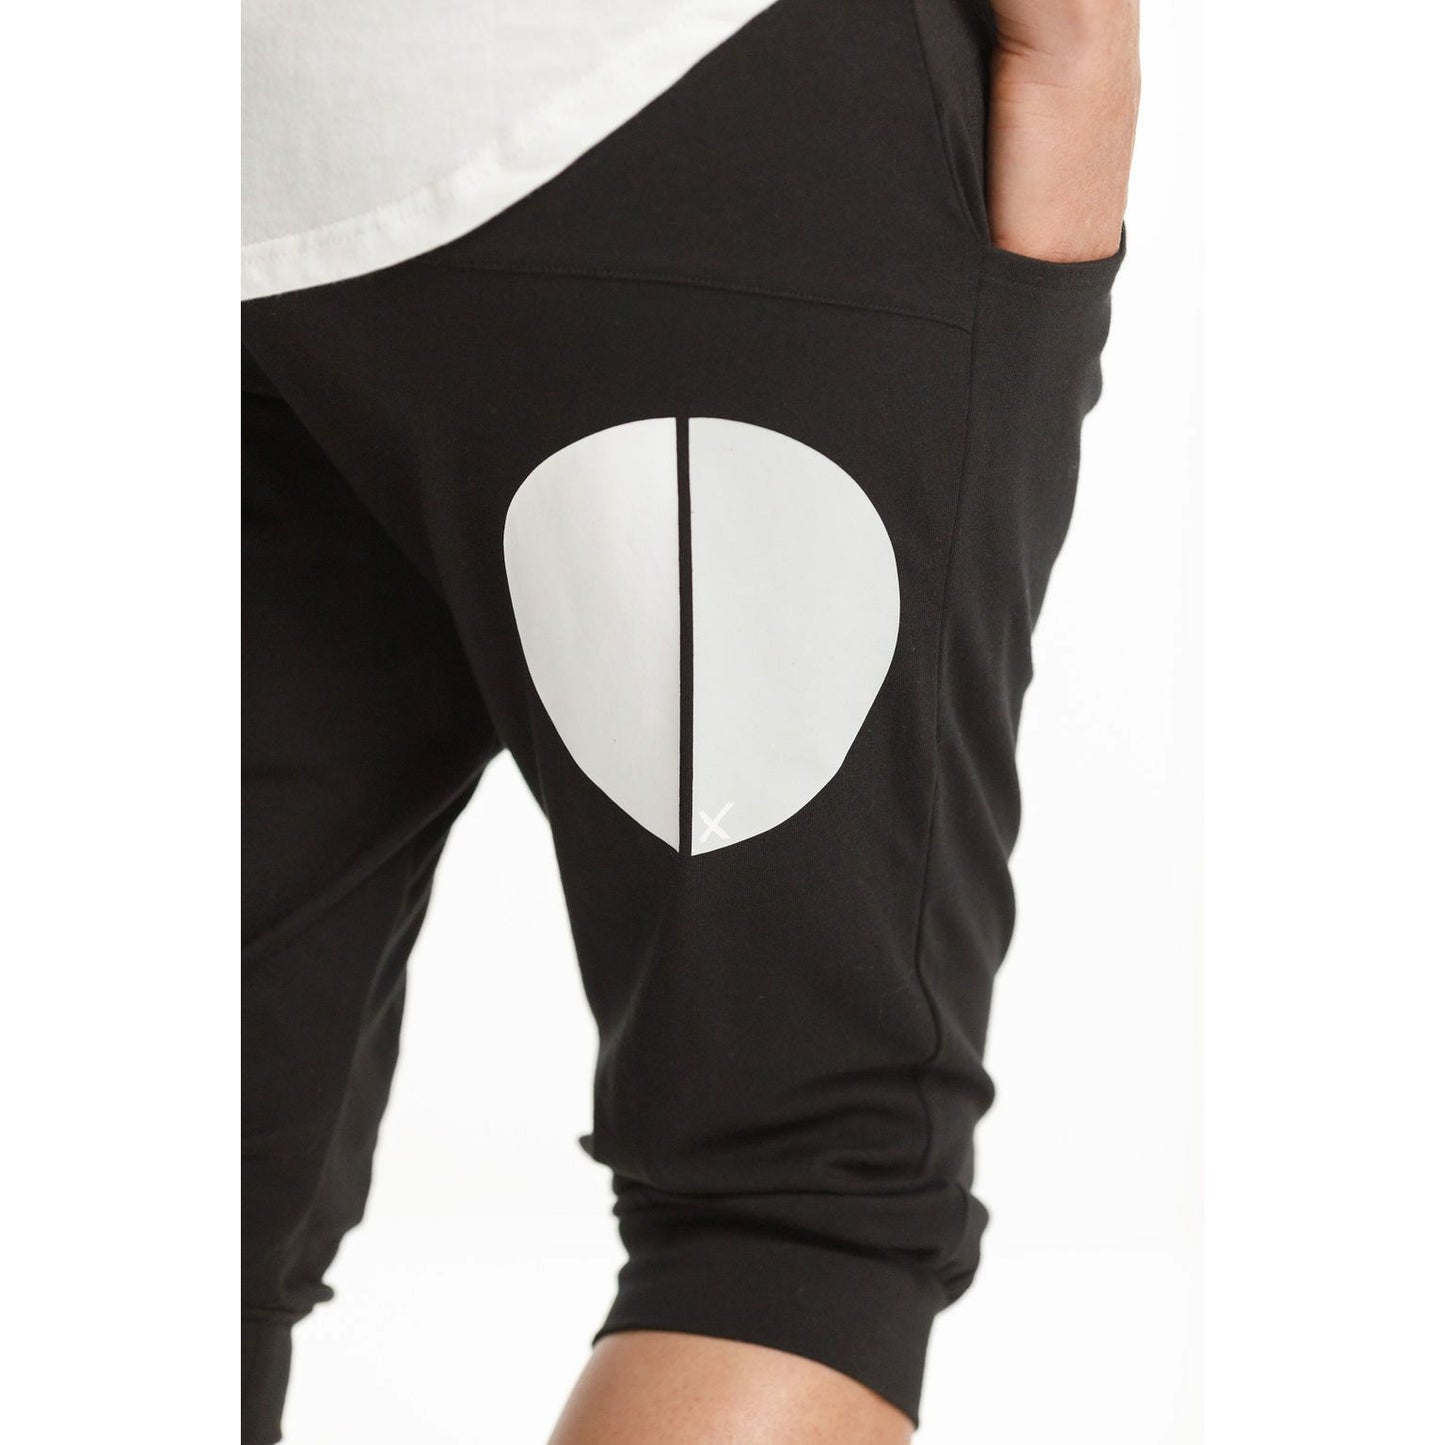 Home-Lee Shorts 3/4 Apartment Pants Black with White/Grey Circle Dot